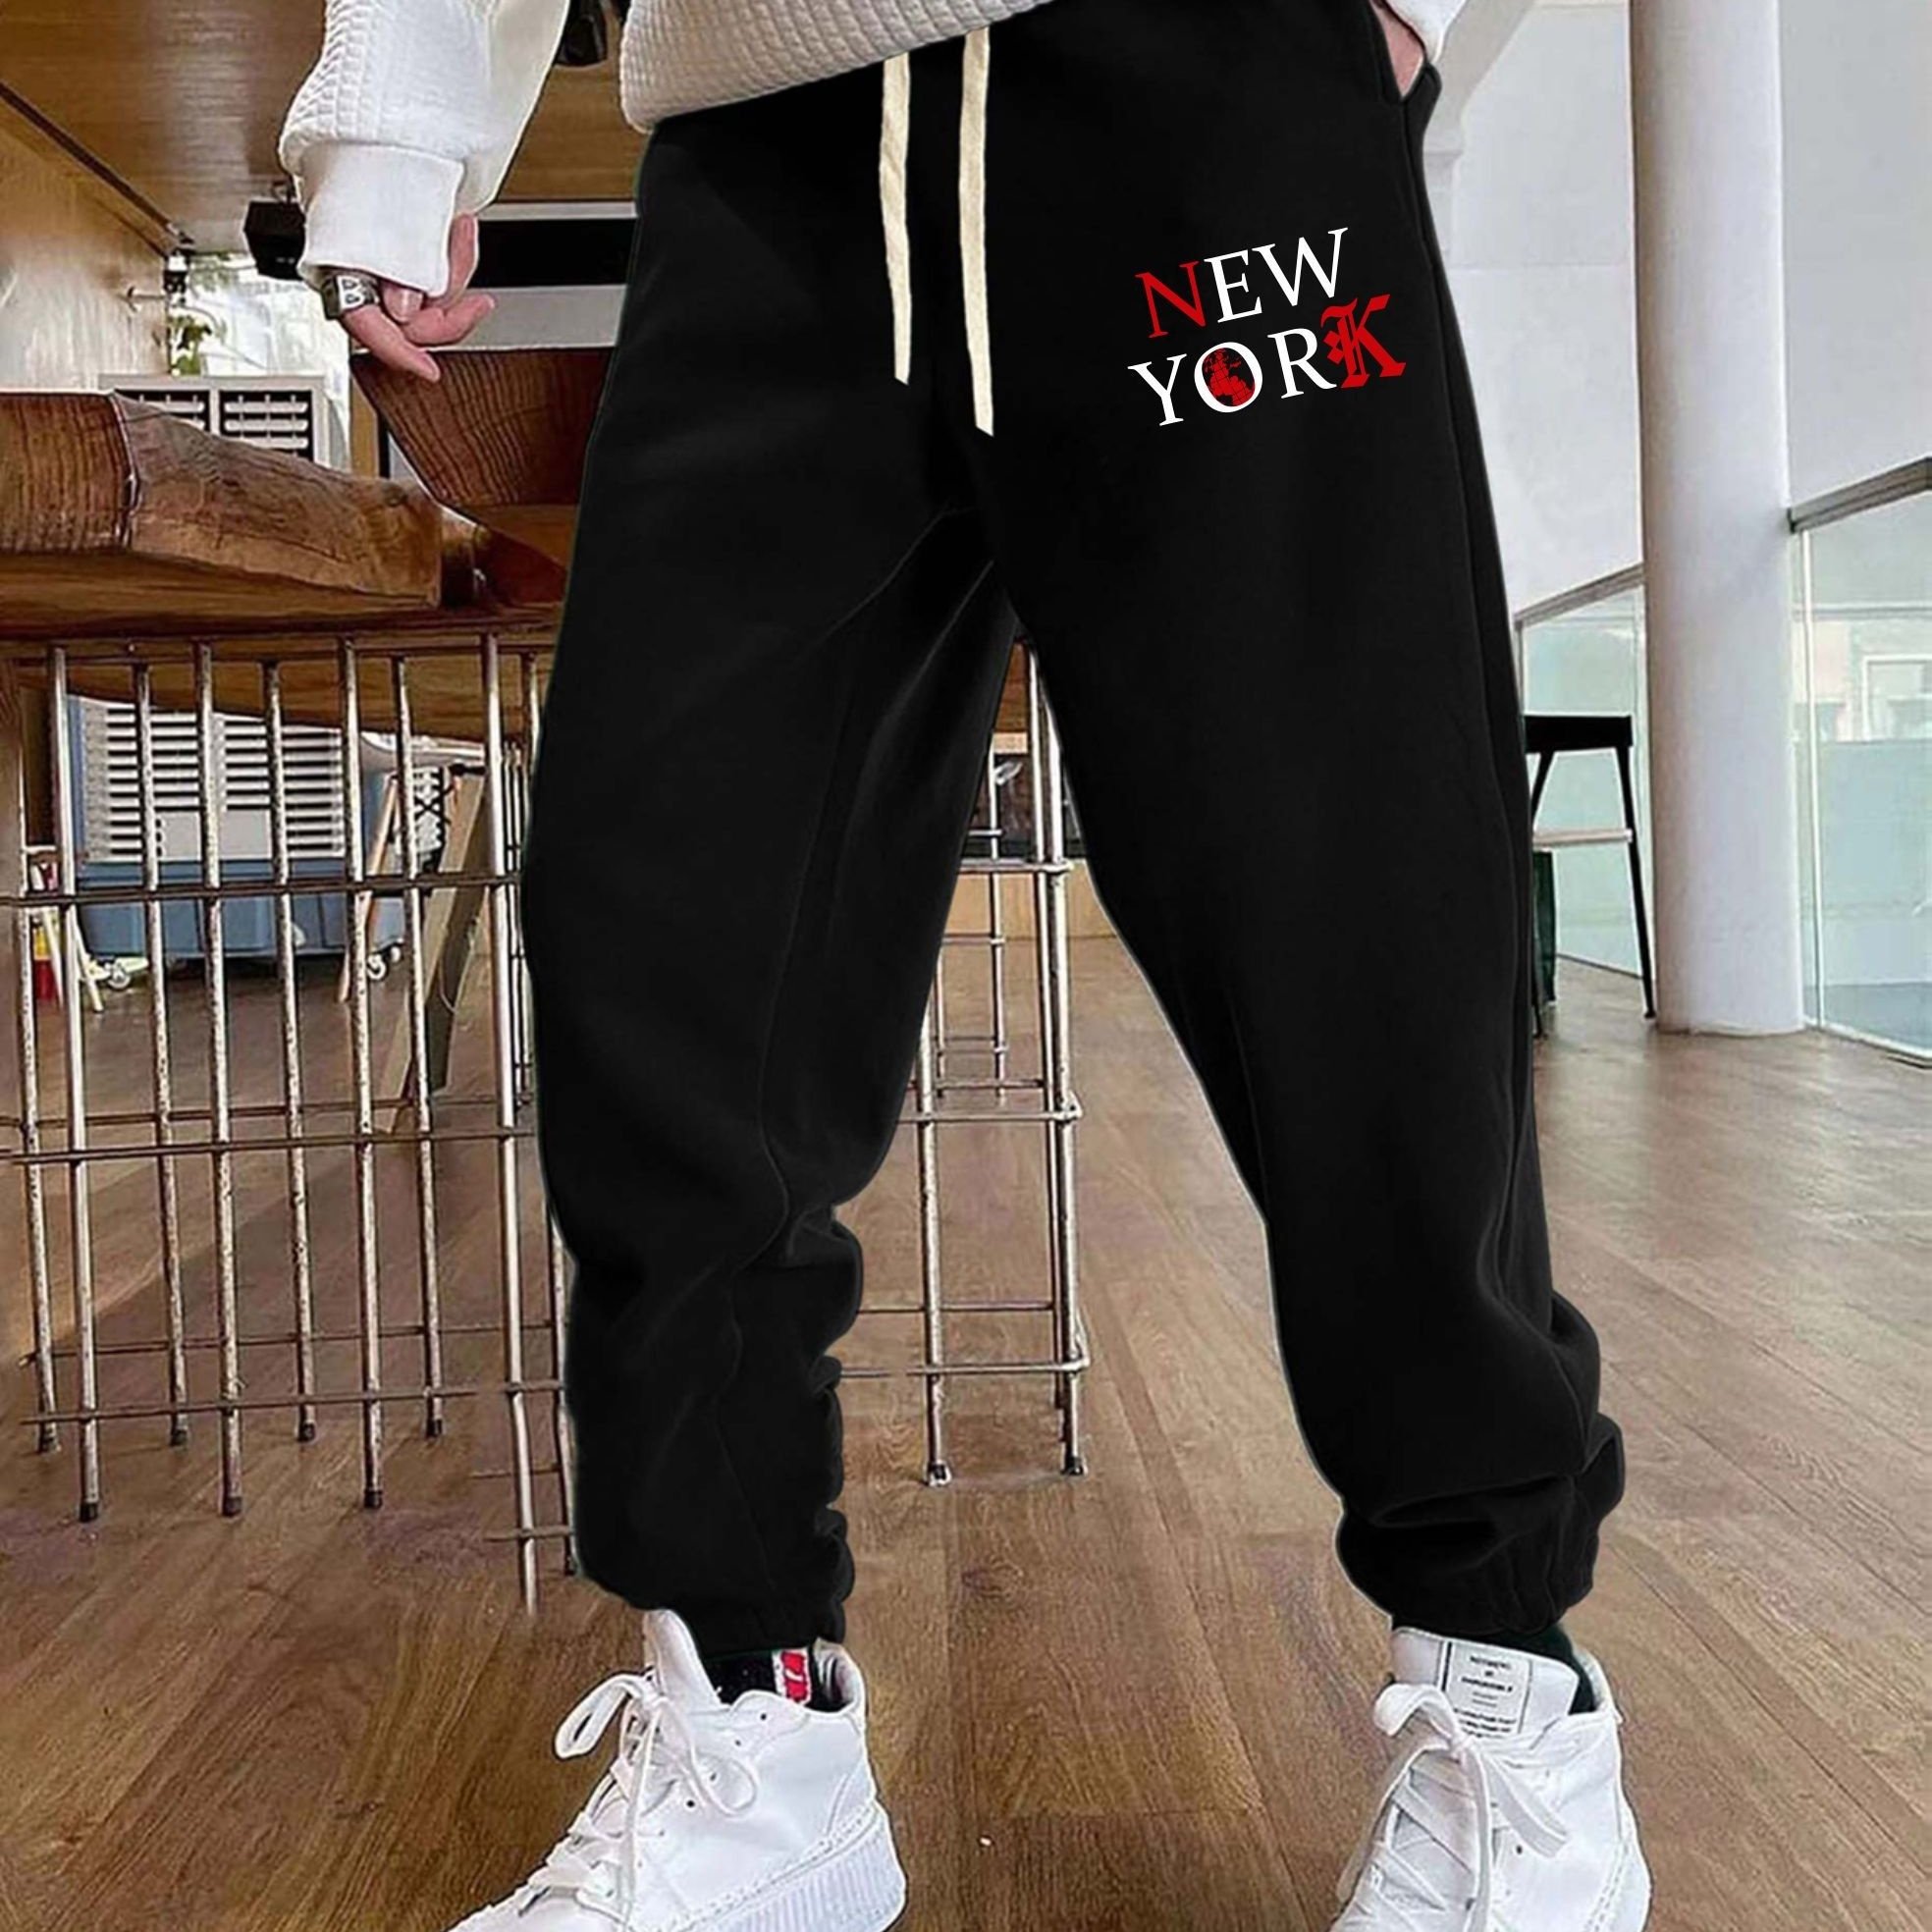 NEW YORK Pattern, Men's Drawstring Sweatpants, Pocket Casual Comfy Jogger  Pants, Mens Clothing For Autumn Winter